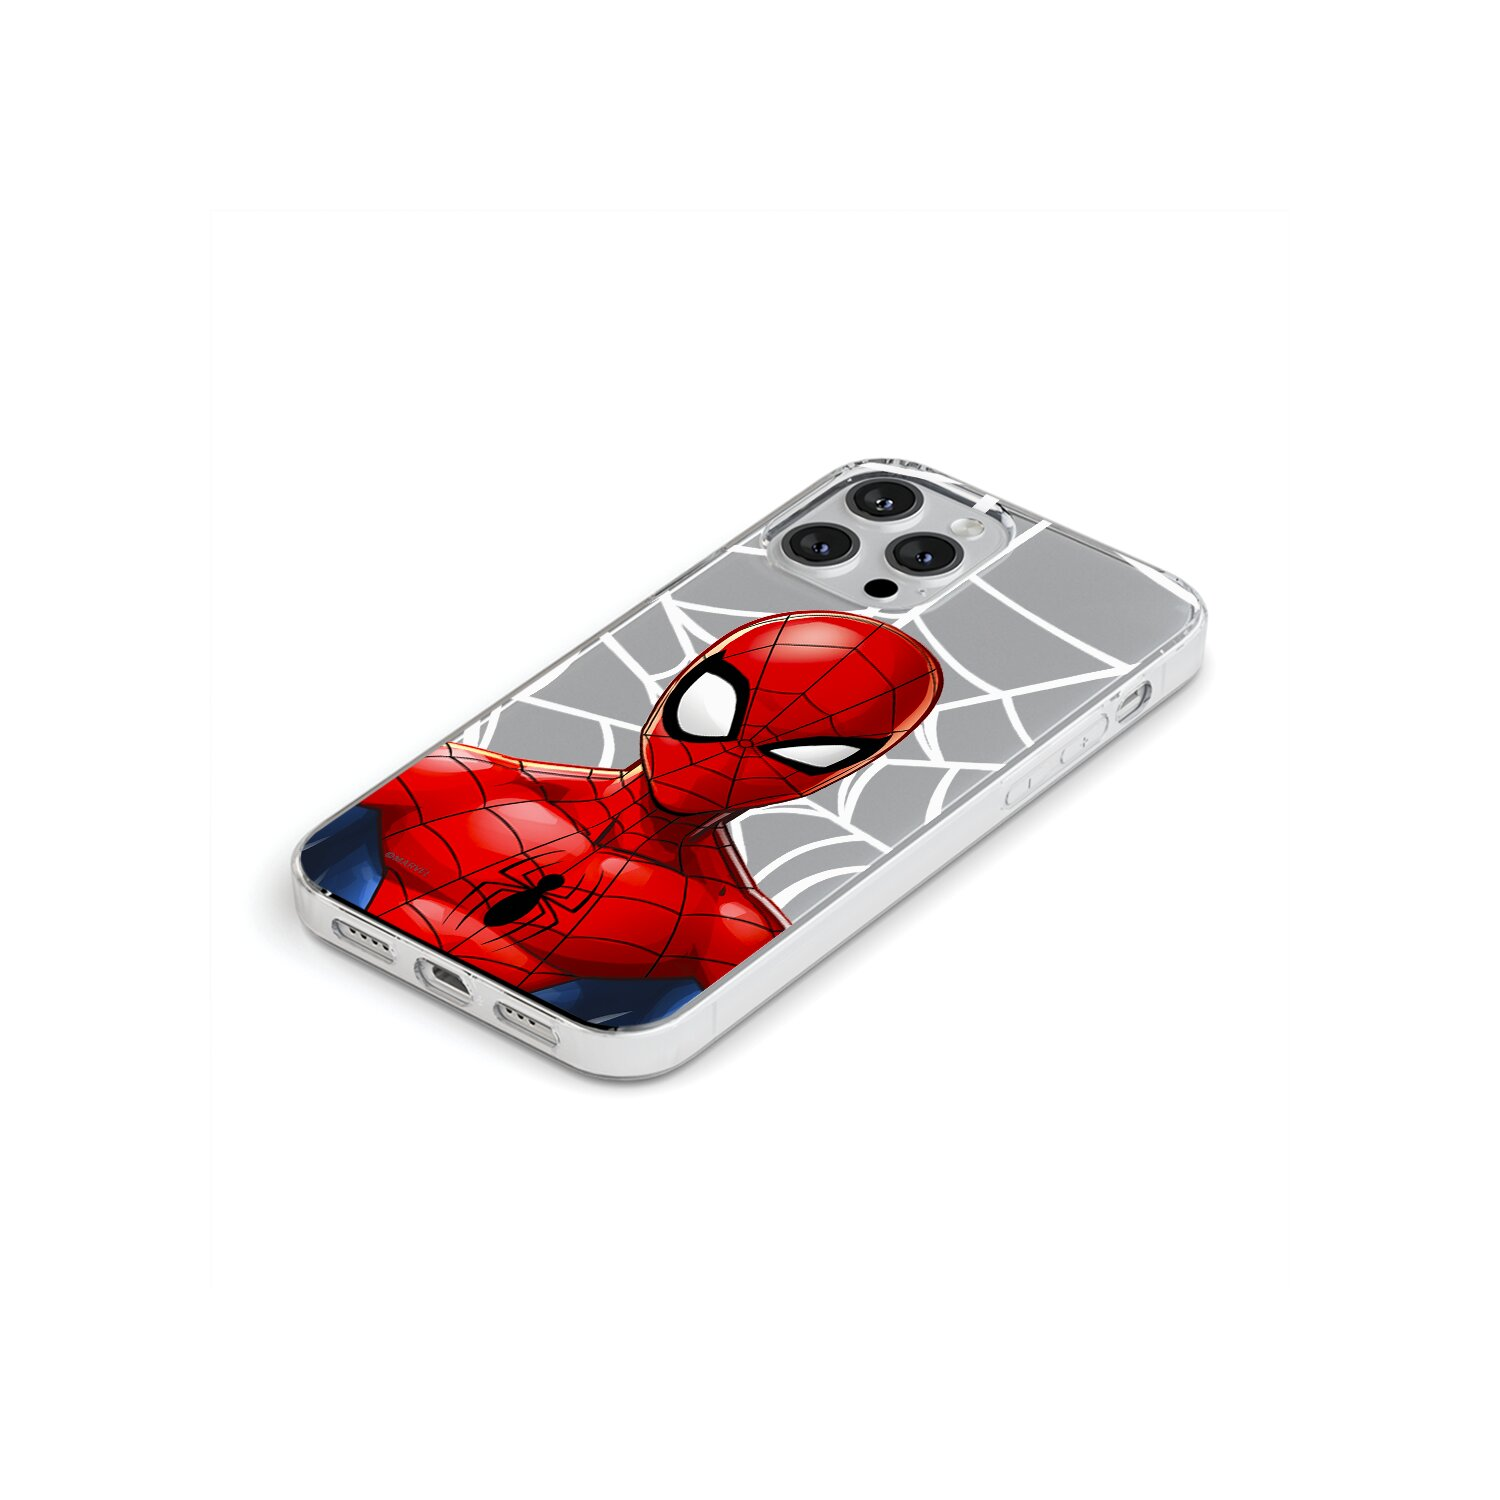 Teildruck, Pro Spider MARVEL iPhone Apple, Man 14 012 Backcover, Max, Transparent